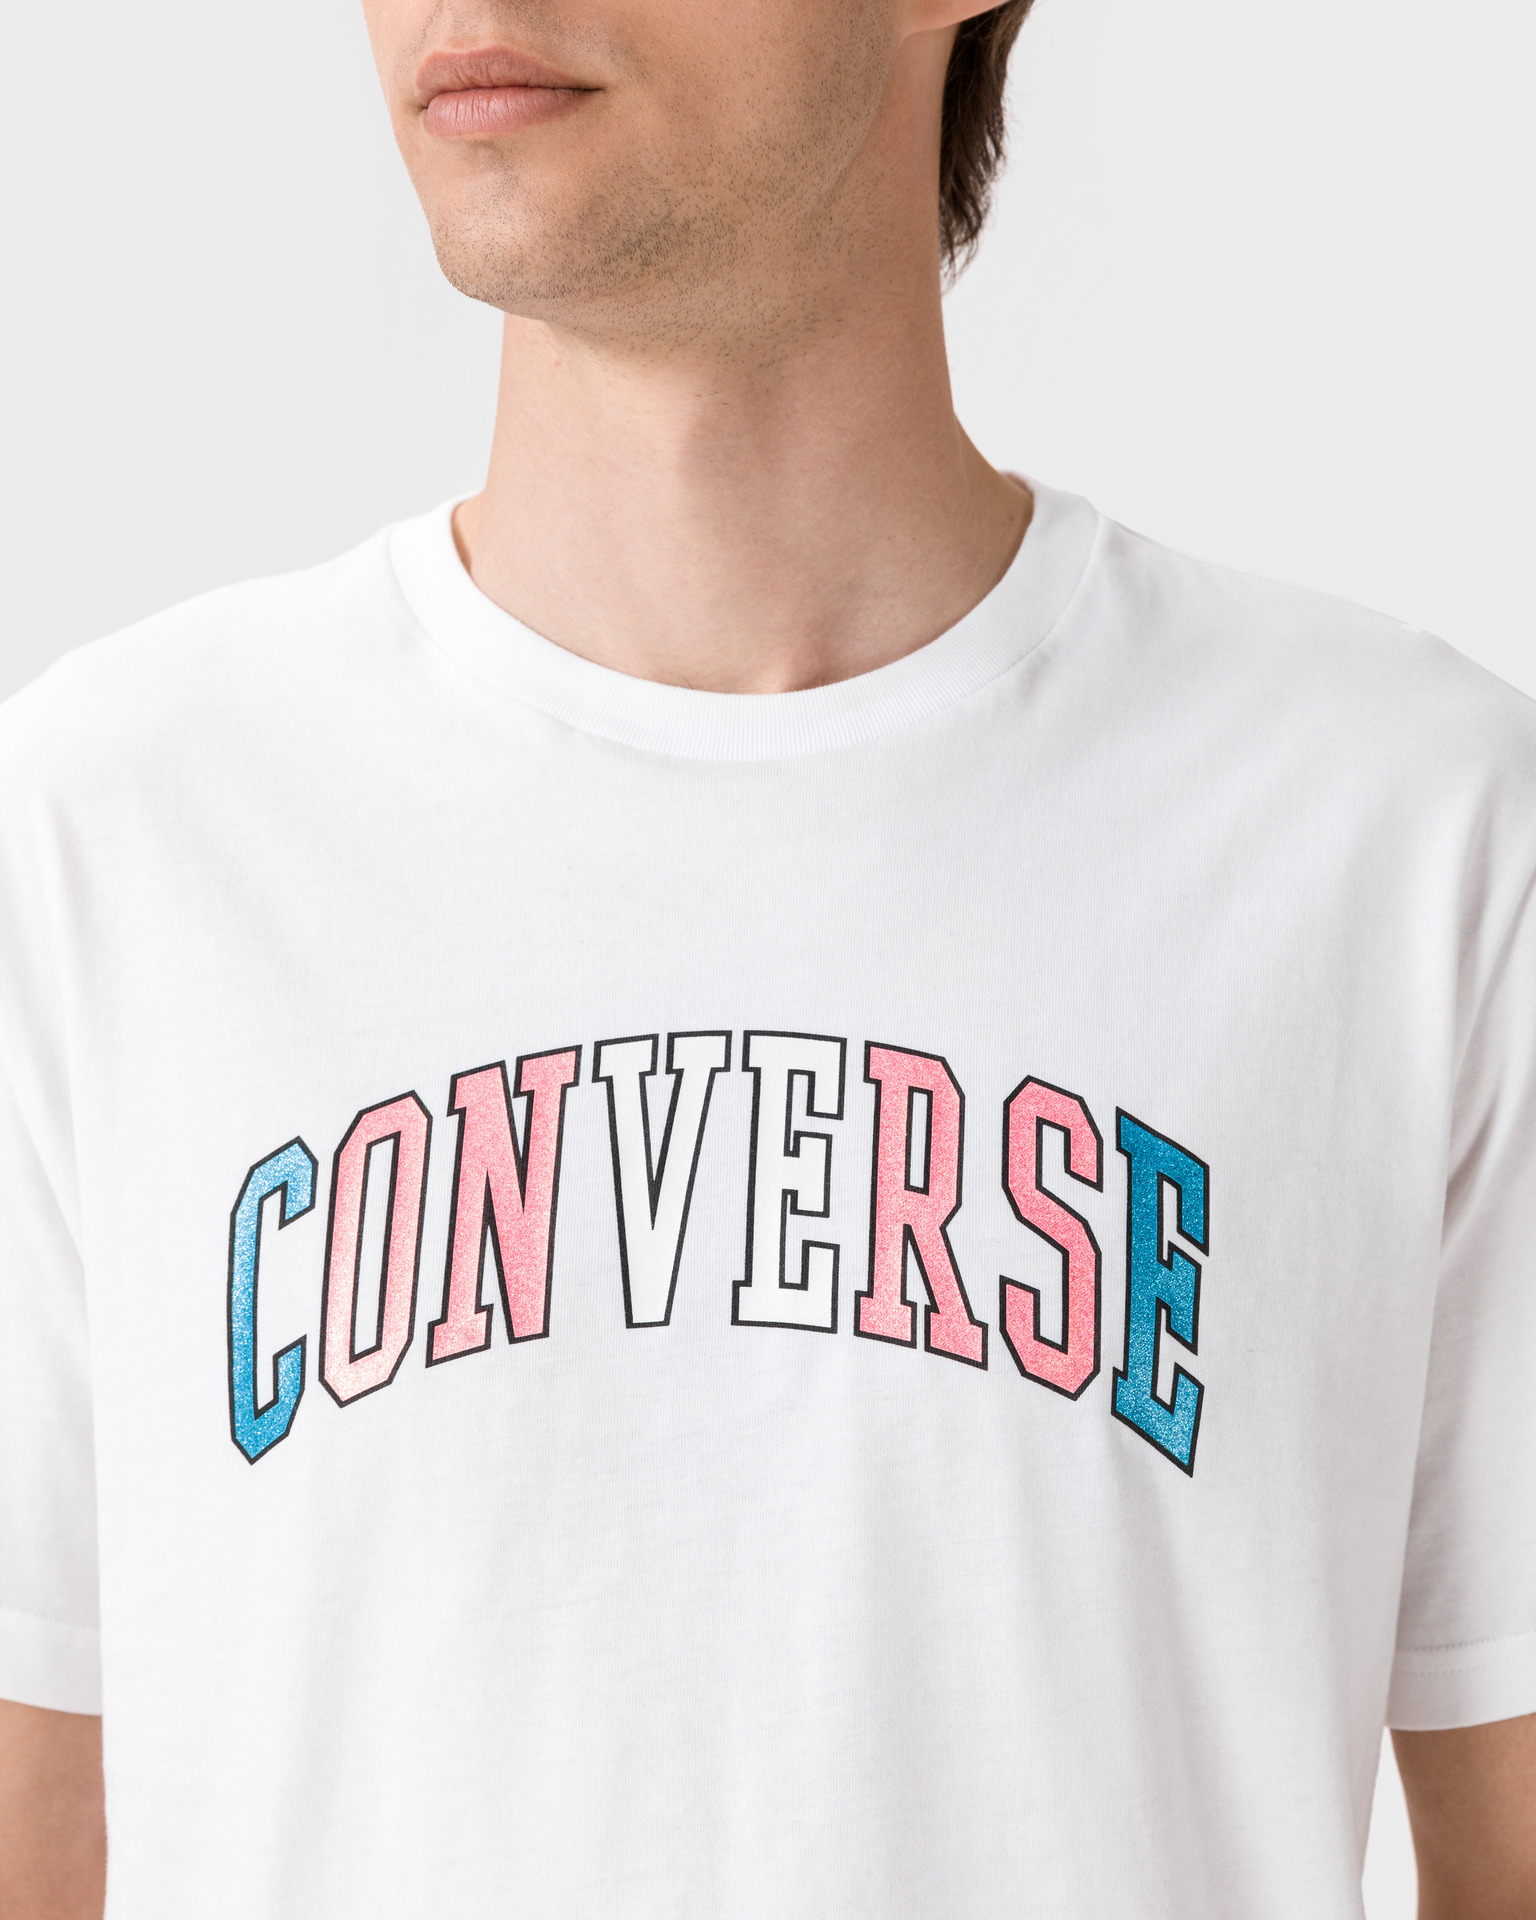 converse pride t shirt